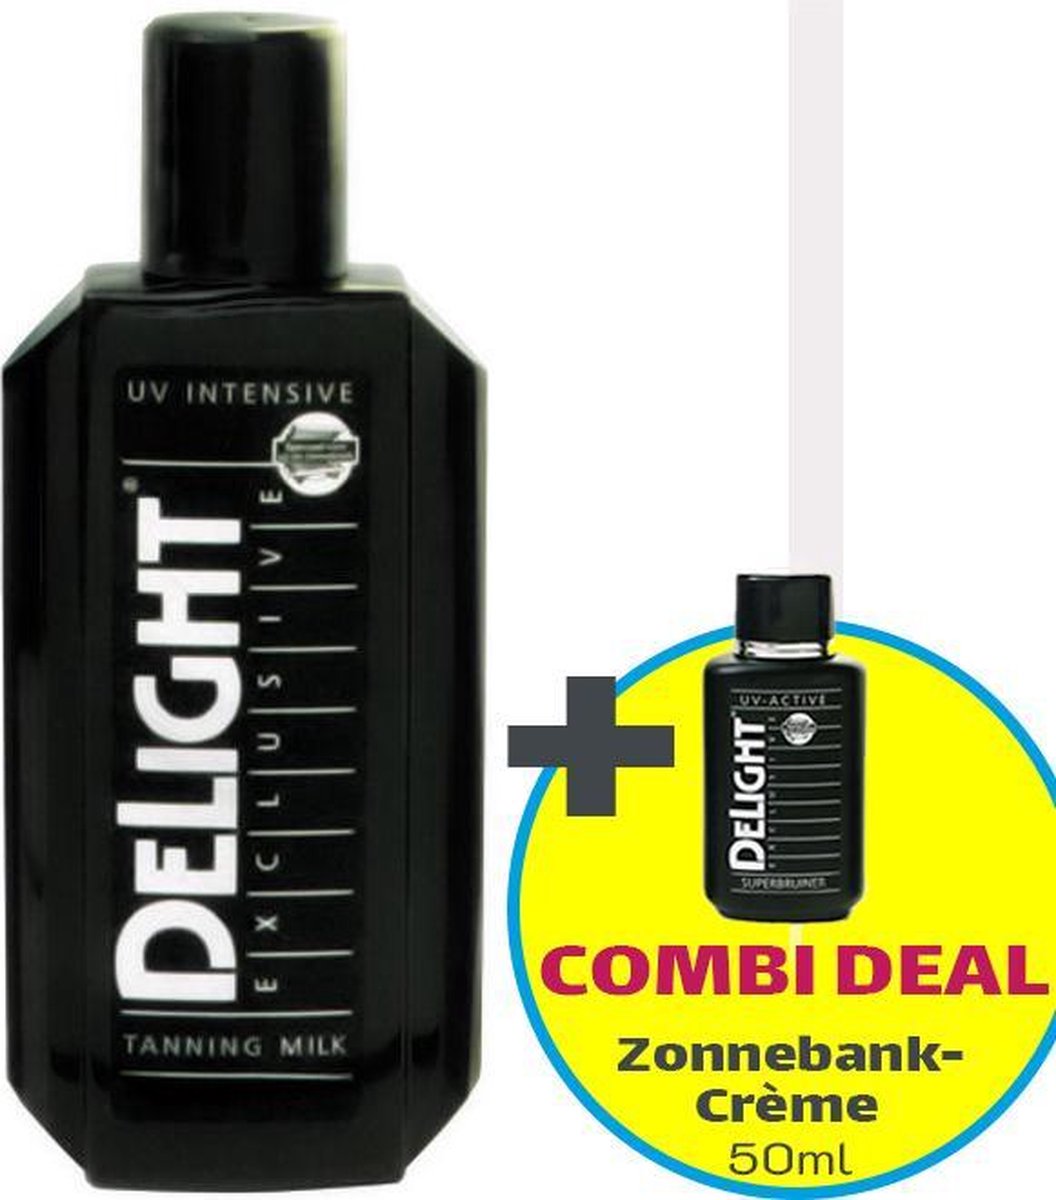 Delight Zonnebankcrème - COMBI DEAL - Tanning Milk - 200ml + 50ml